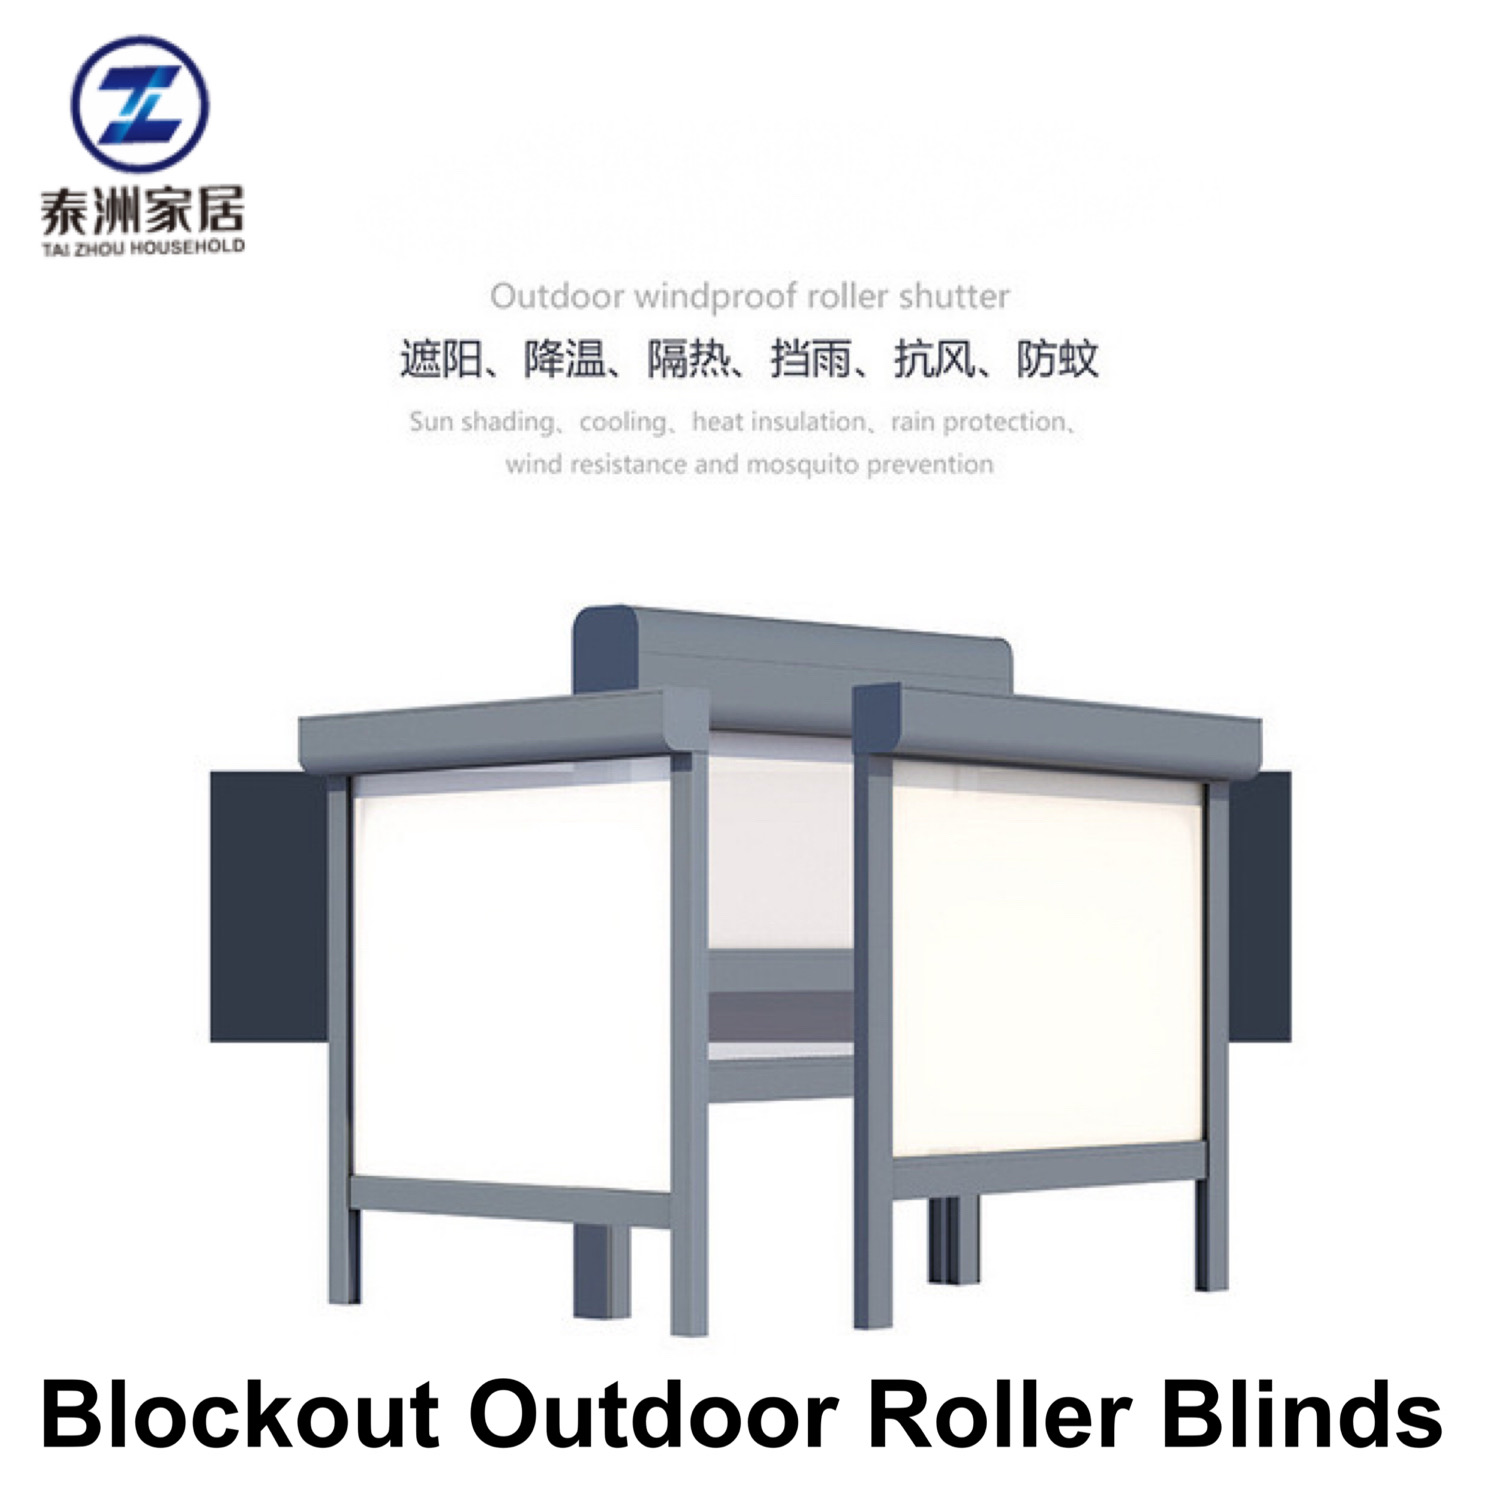 95% Blockout Outdoor Roller Blinds